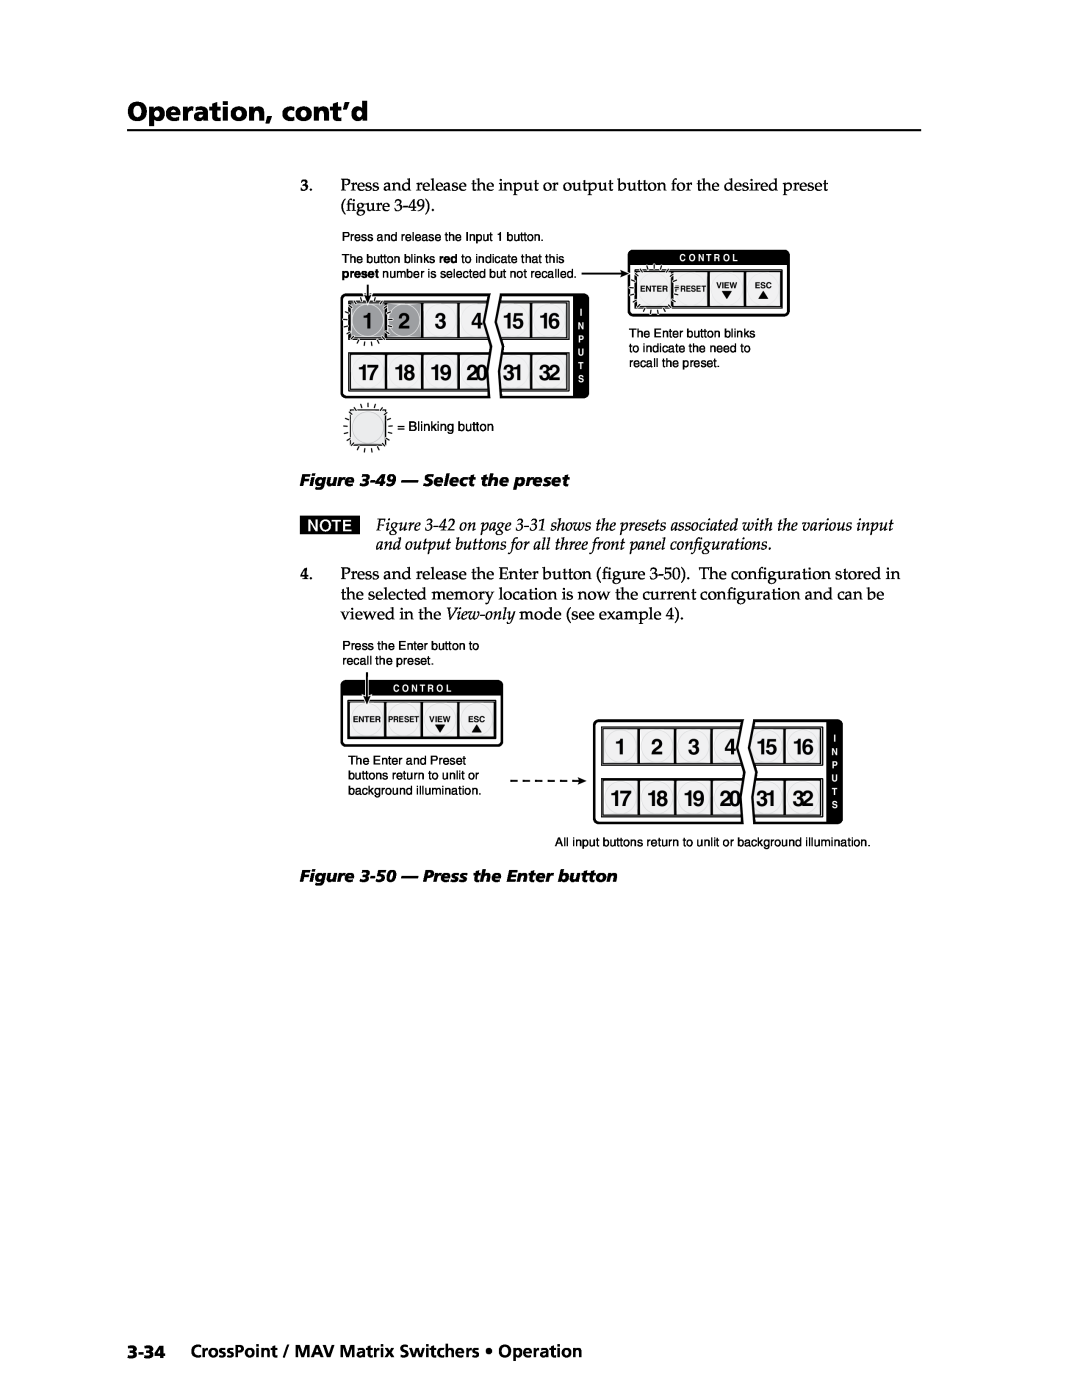 Extron electronic MAV Plus Series 1 2 3 4 15, Operation, cont’d, 49 - Select the preset, 50 - Press the Enter button, View 